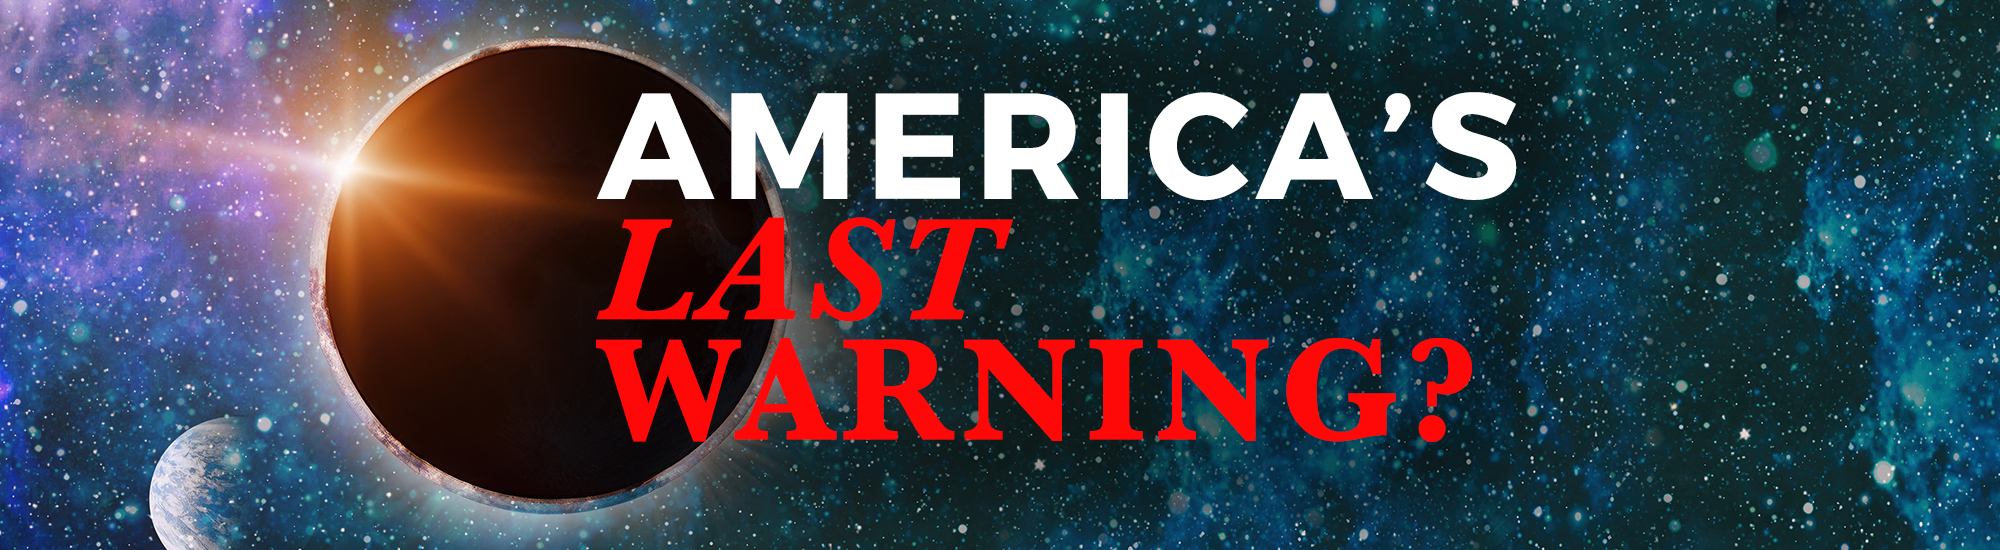  America’s Last Warning?